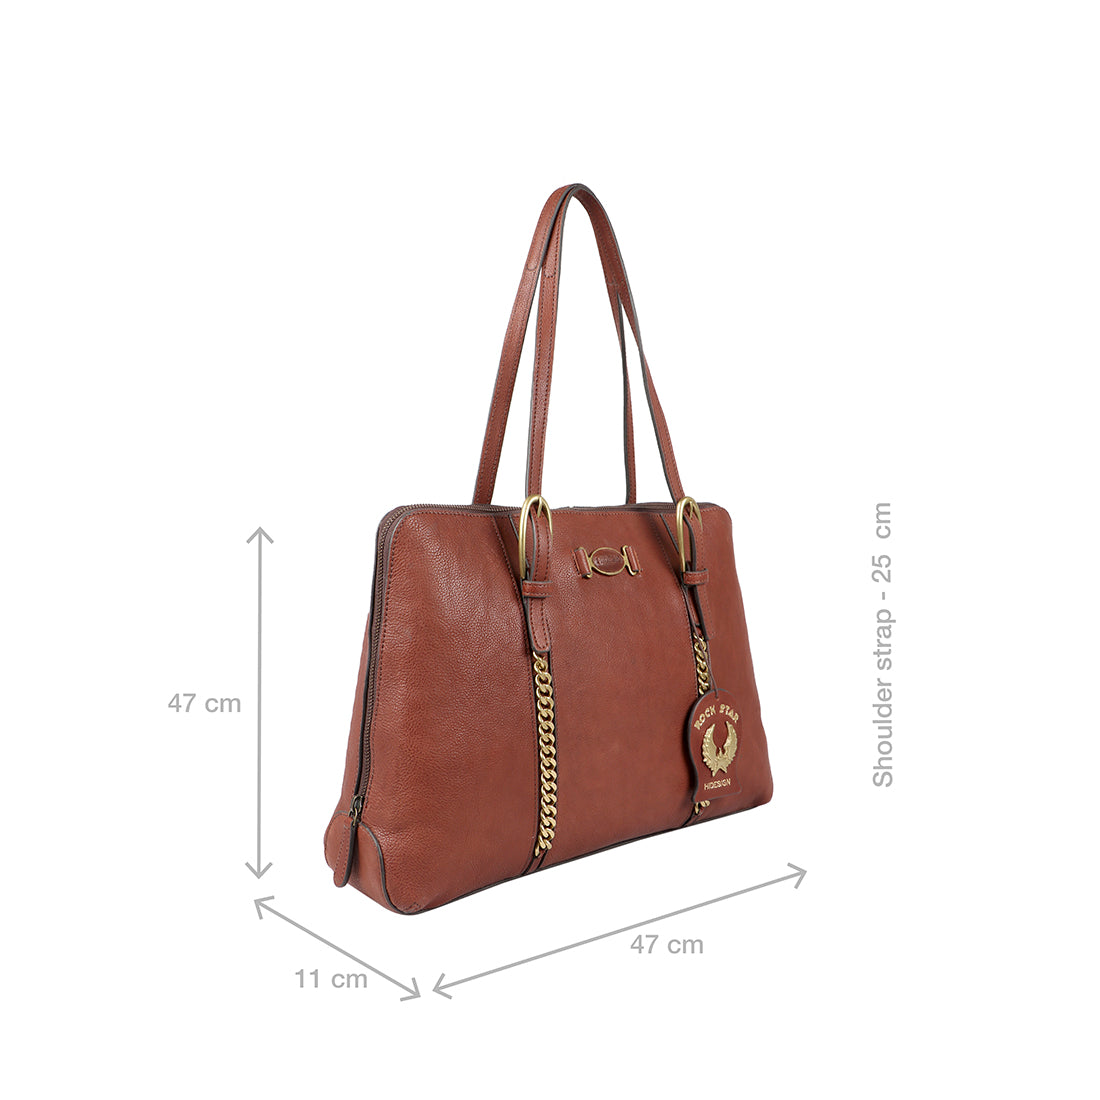 Hidesign Laptop Bags : Buy Hidesign Lovato Women Laptop Bags (L